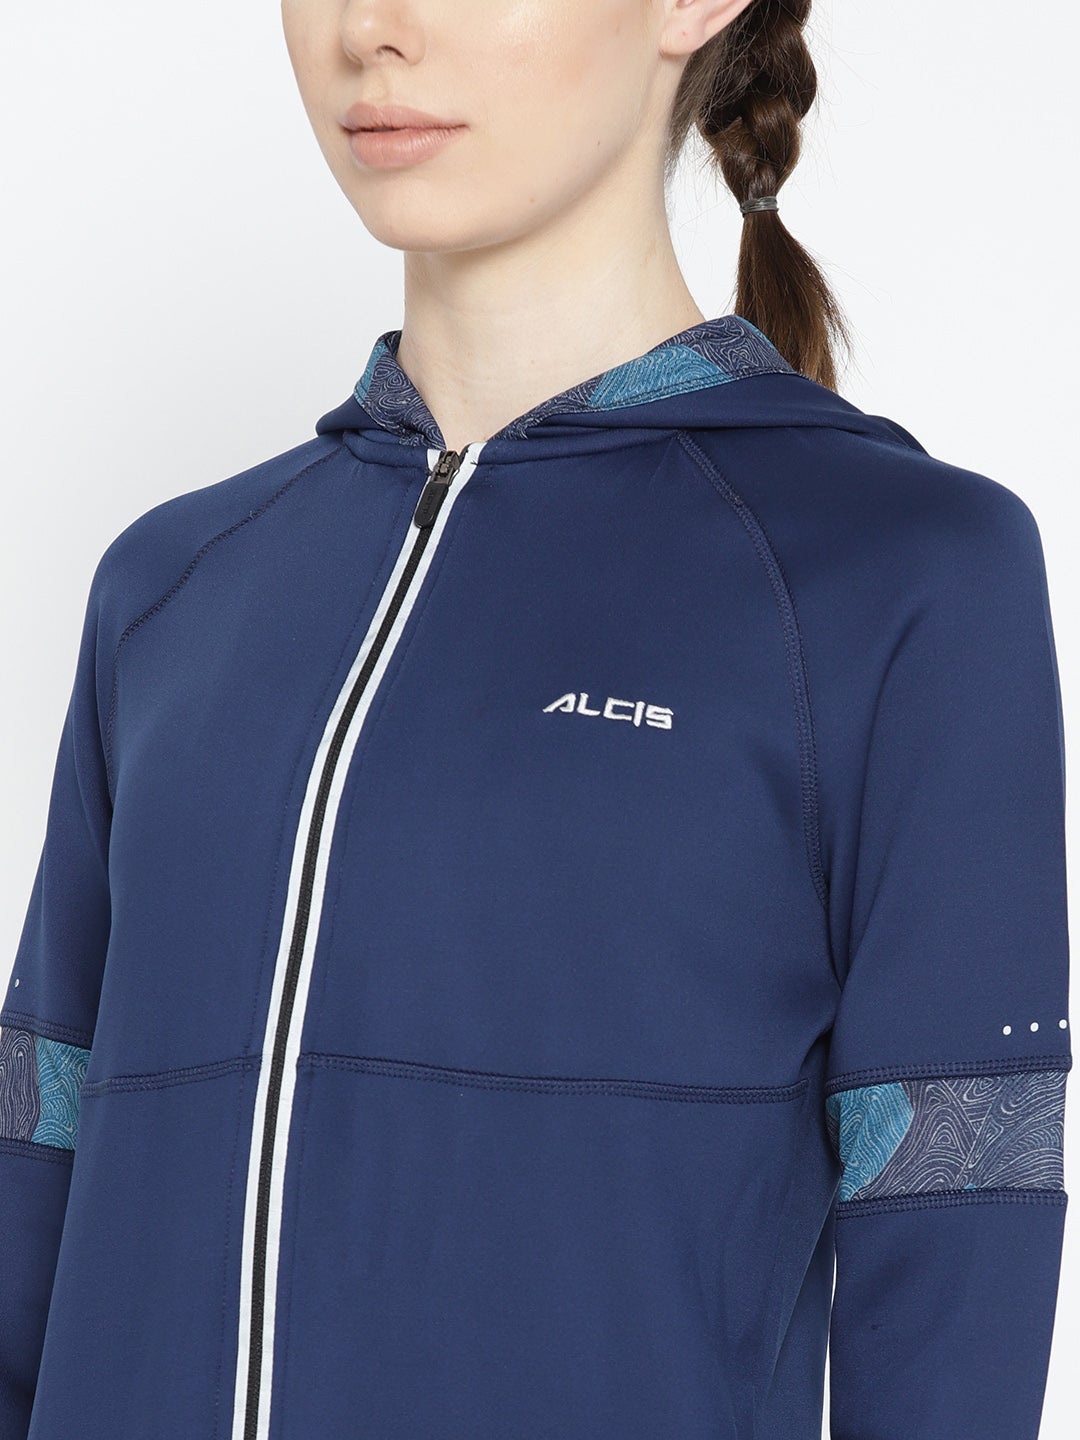 Alcis Women Solid Dark Blue Track Suit